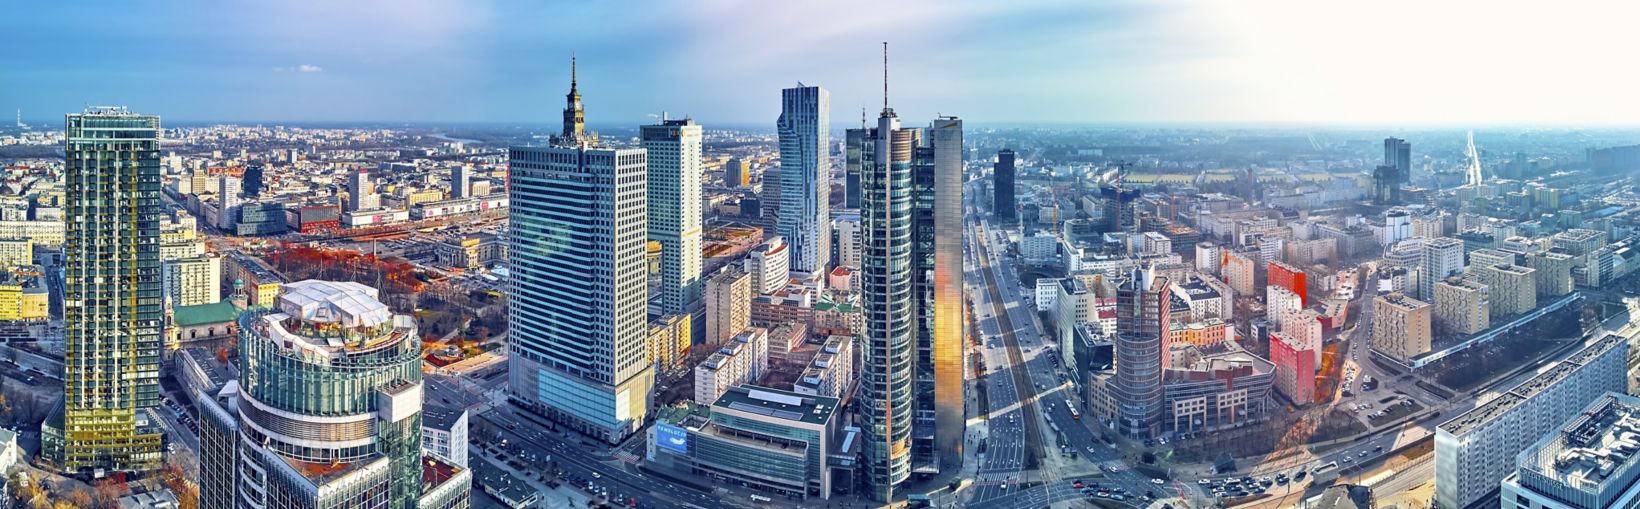 Smuk panoramaudsigt fra drone over den moderne by Warszawa